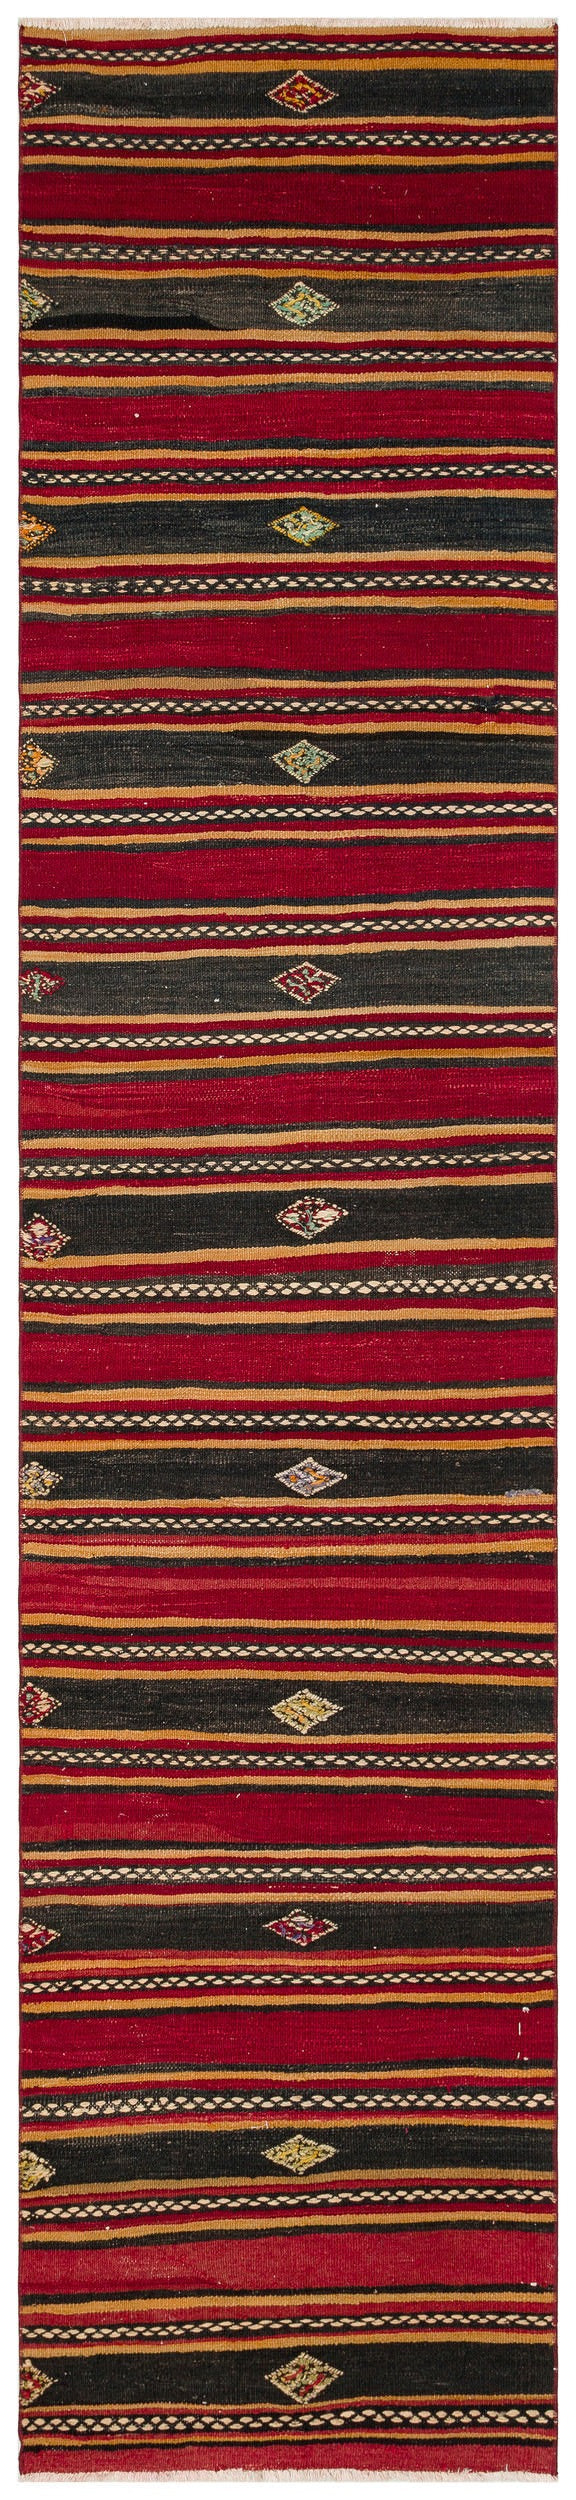 Cretan Red Striped Wool Hand Woven Carpet 082 x 341